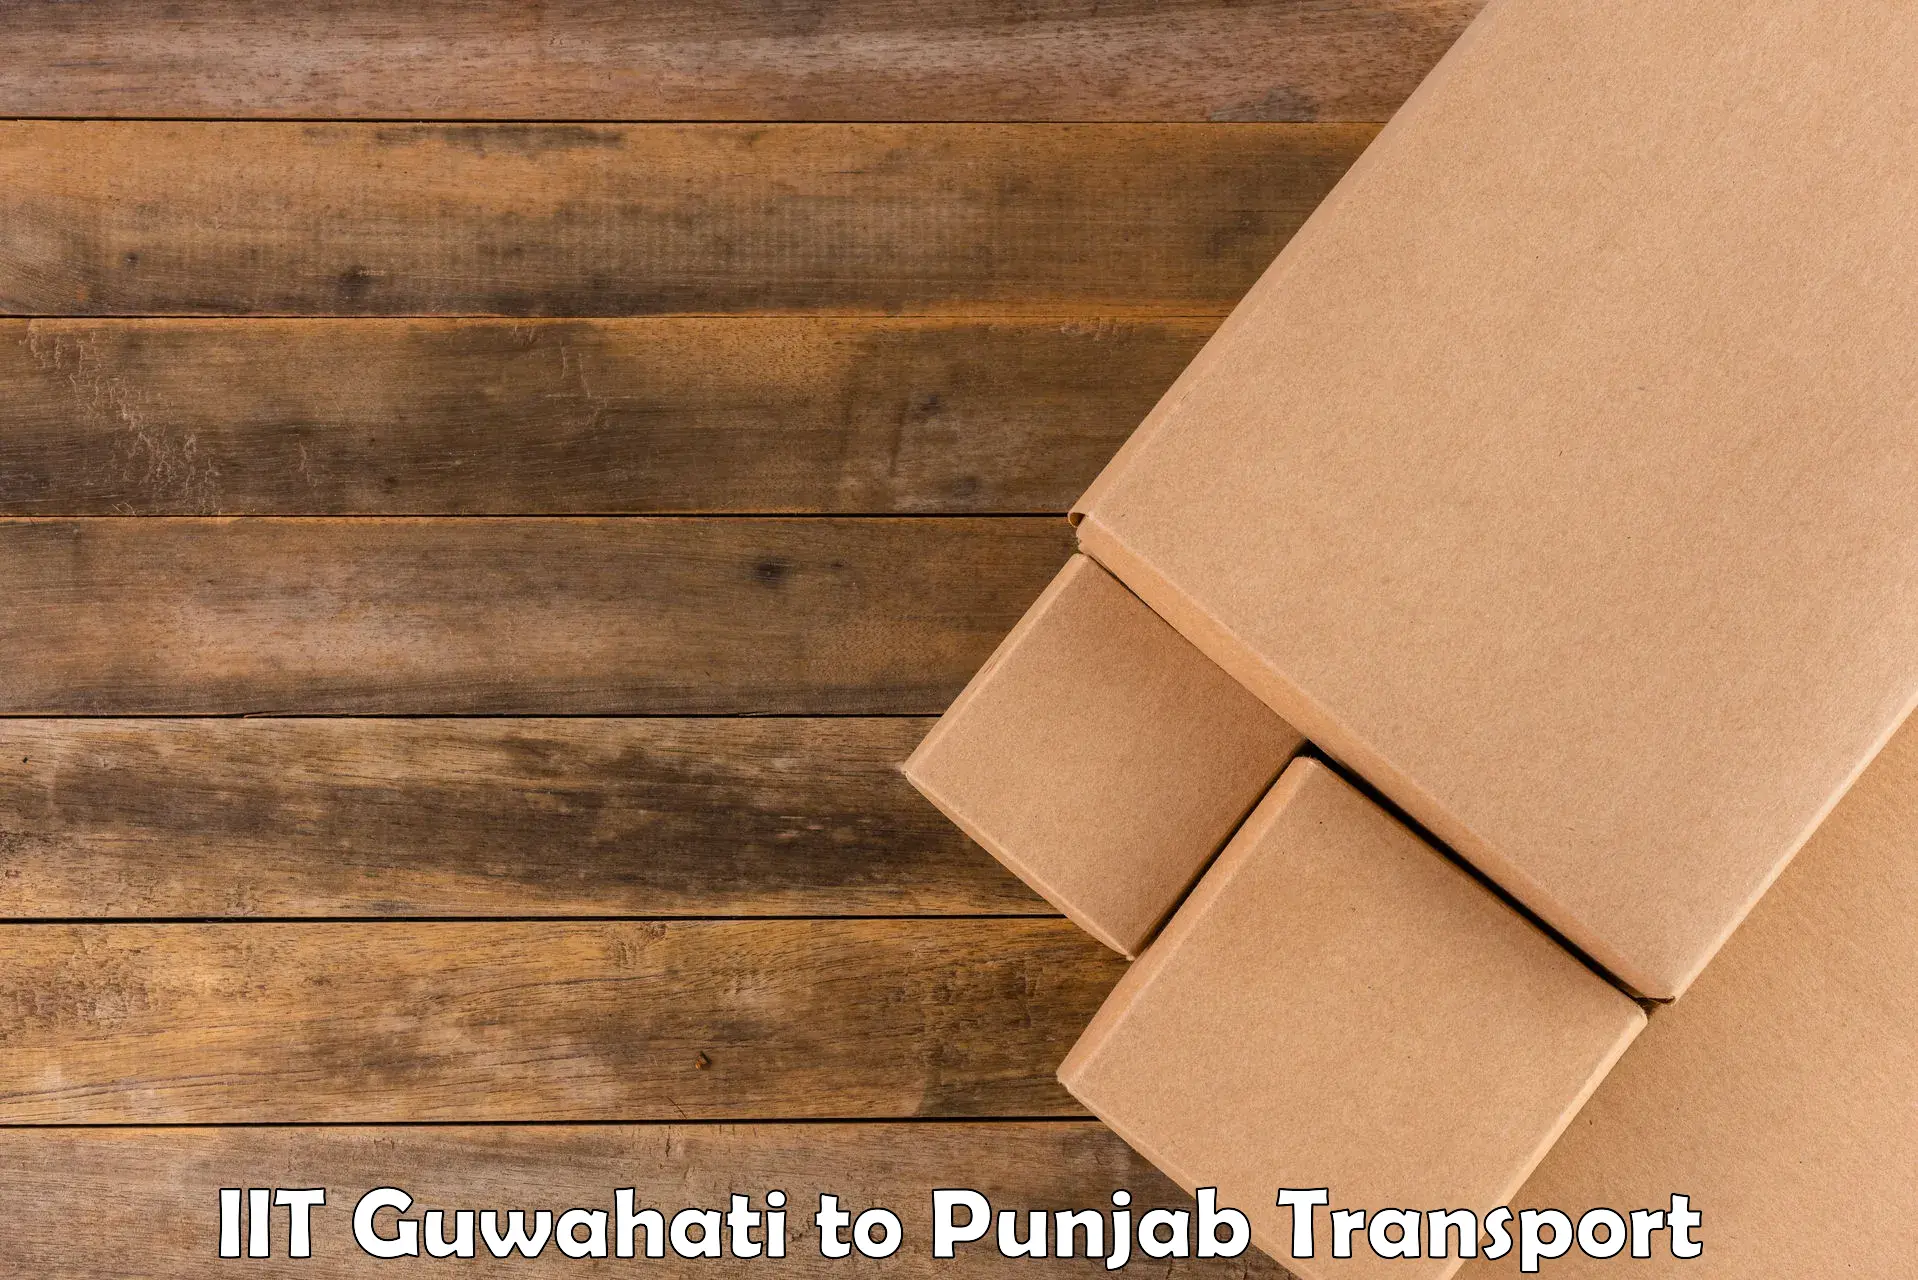 Daily transport service IIT Guwahati to Patiala